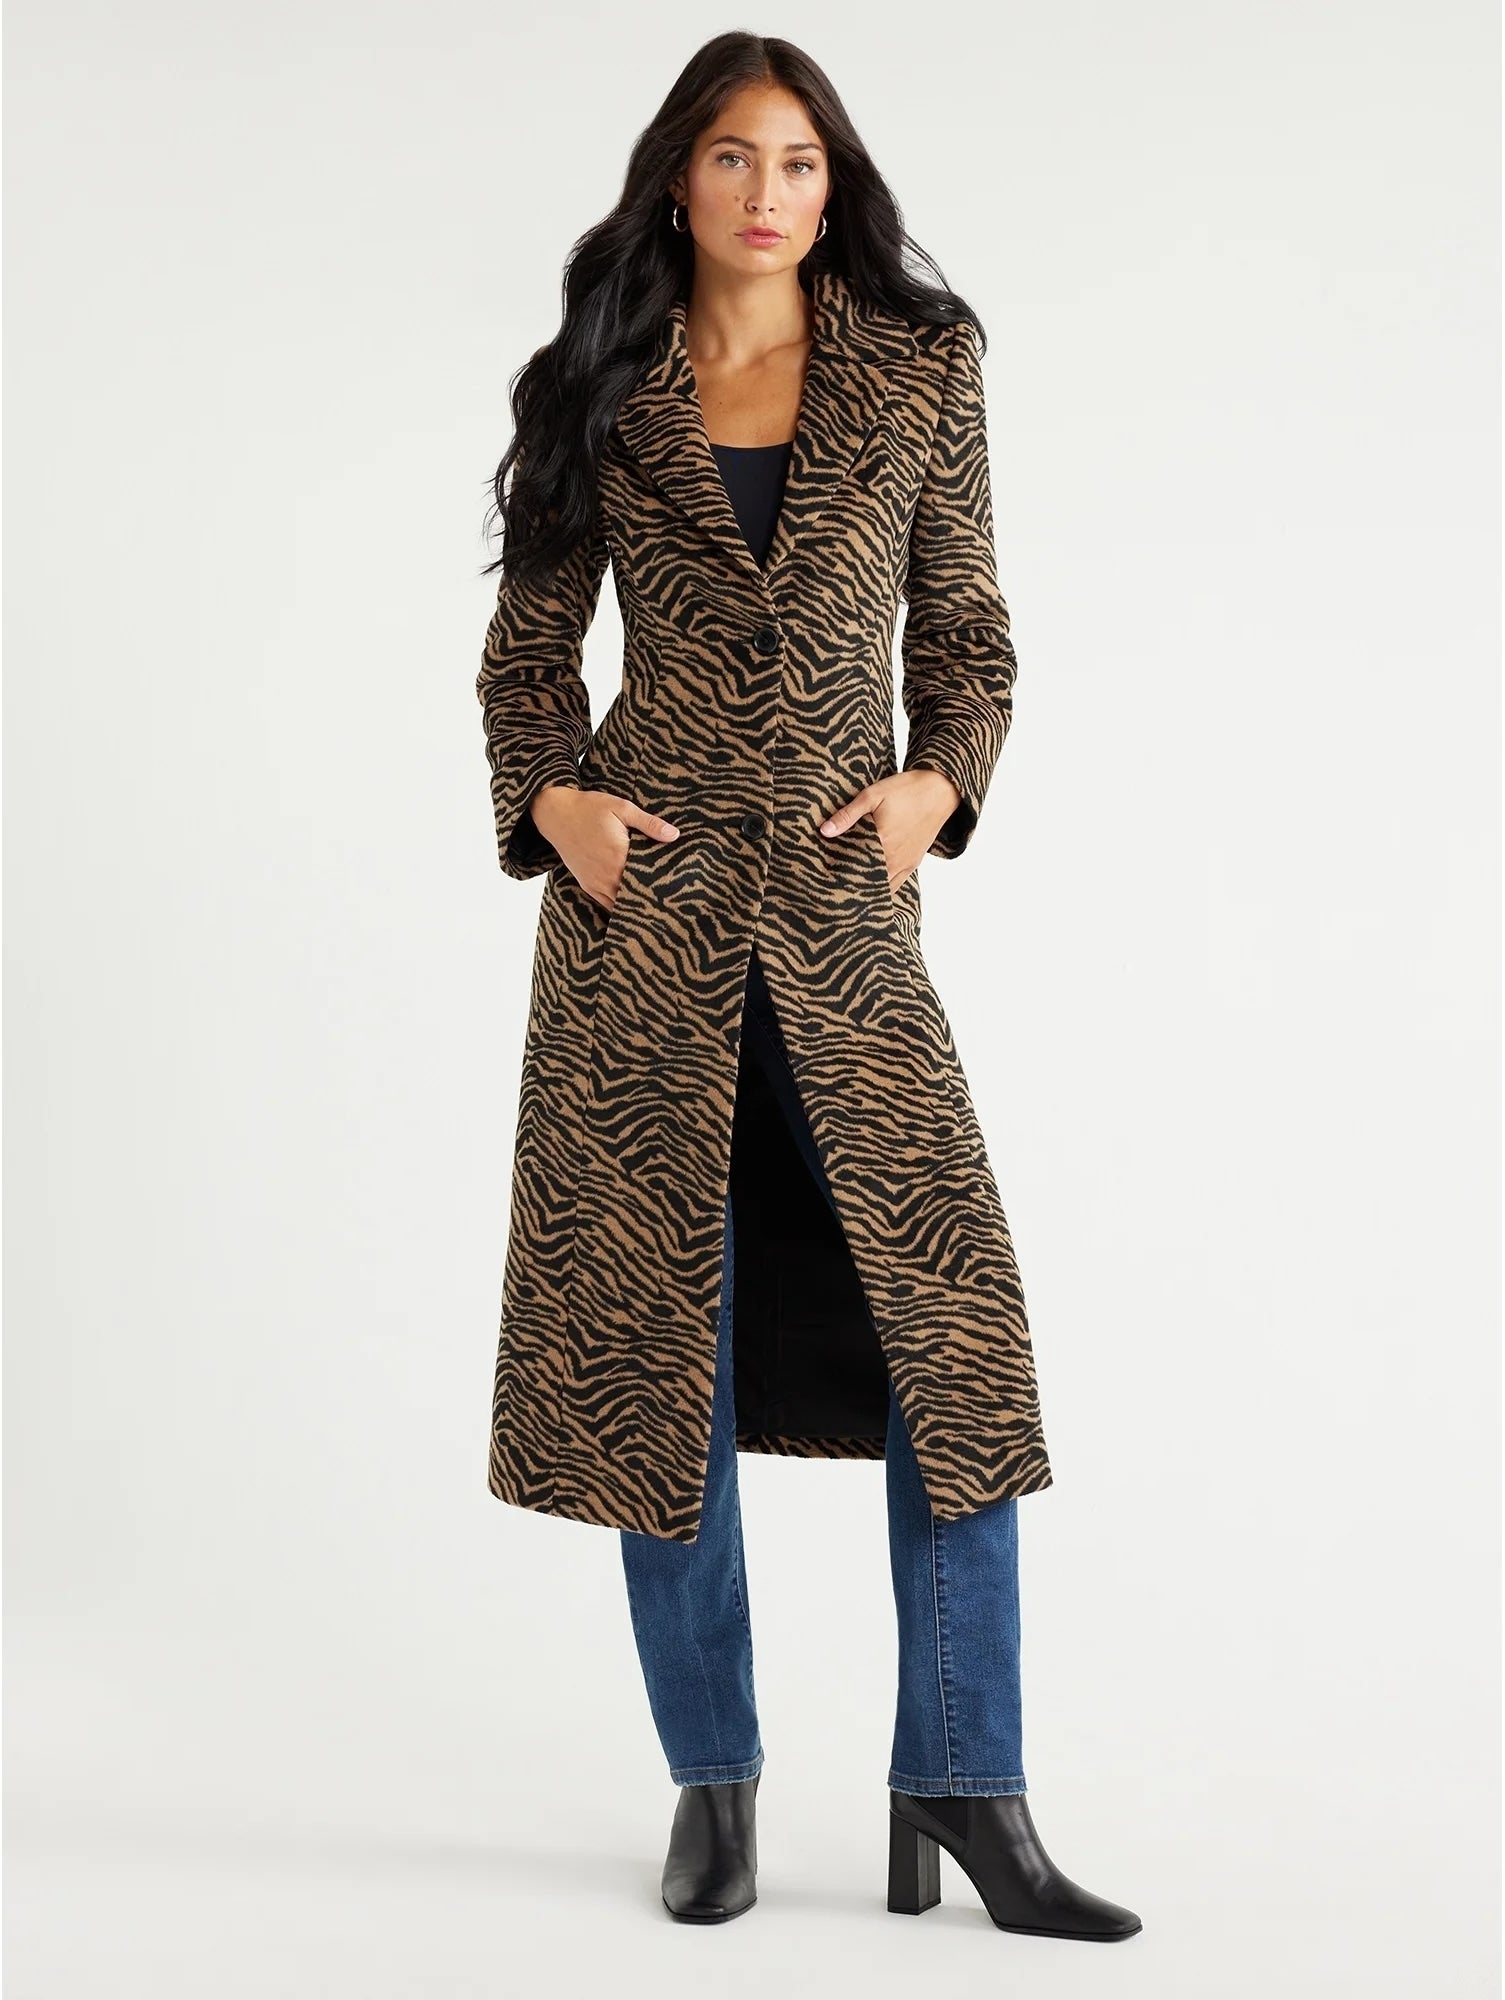 model wearing a long zebra print coat